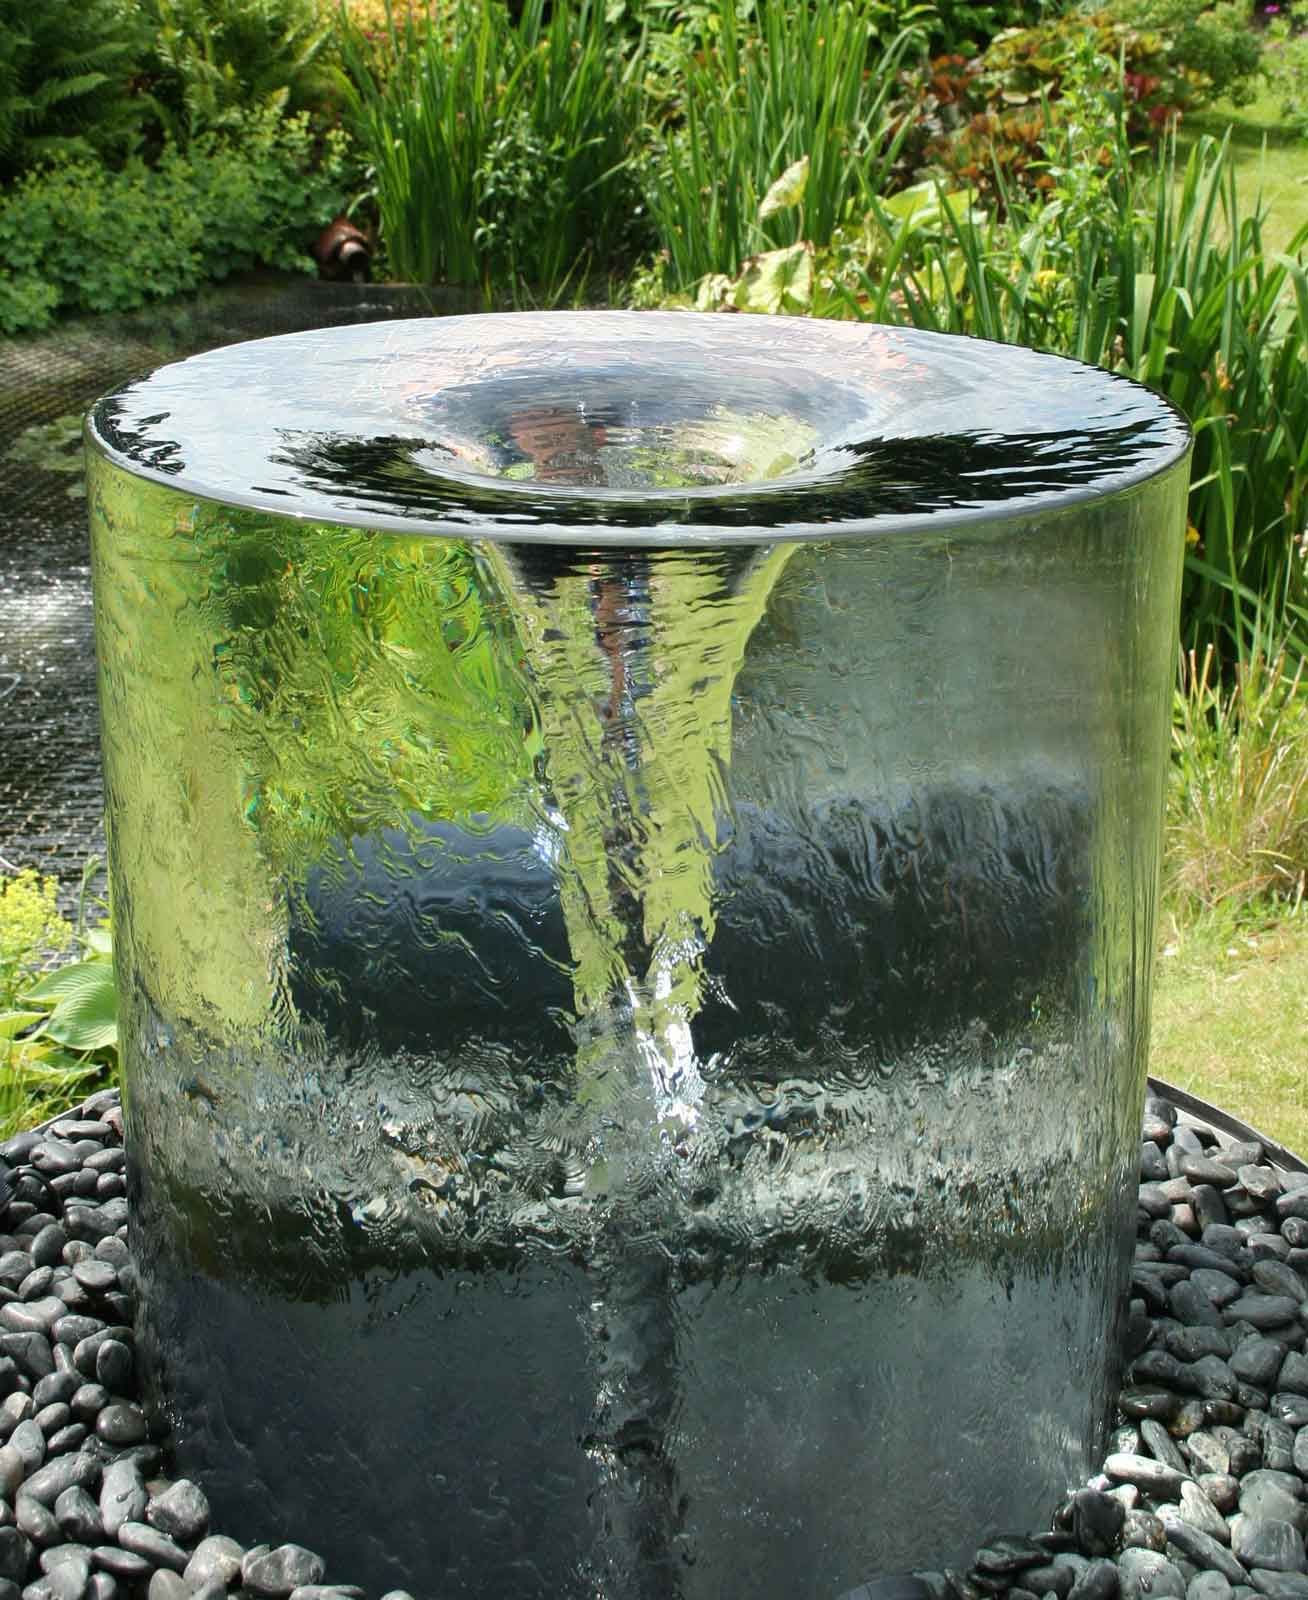 How to make a pet tornado - the homemade vortex water fountain ...